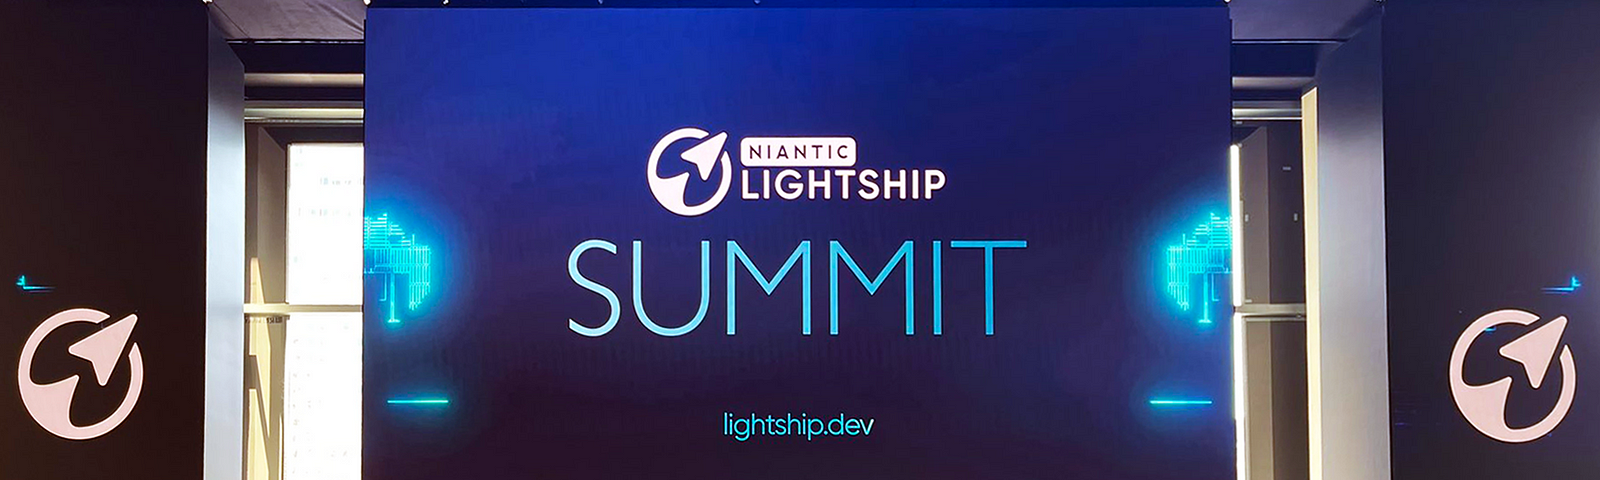 The opening of Niantic Lightship Summit 大會開幕